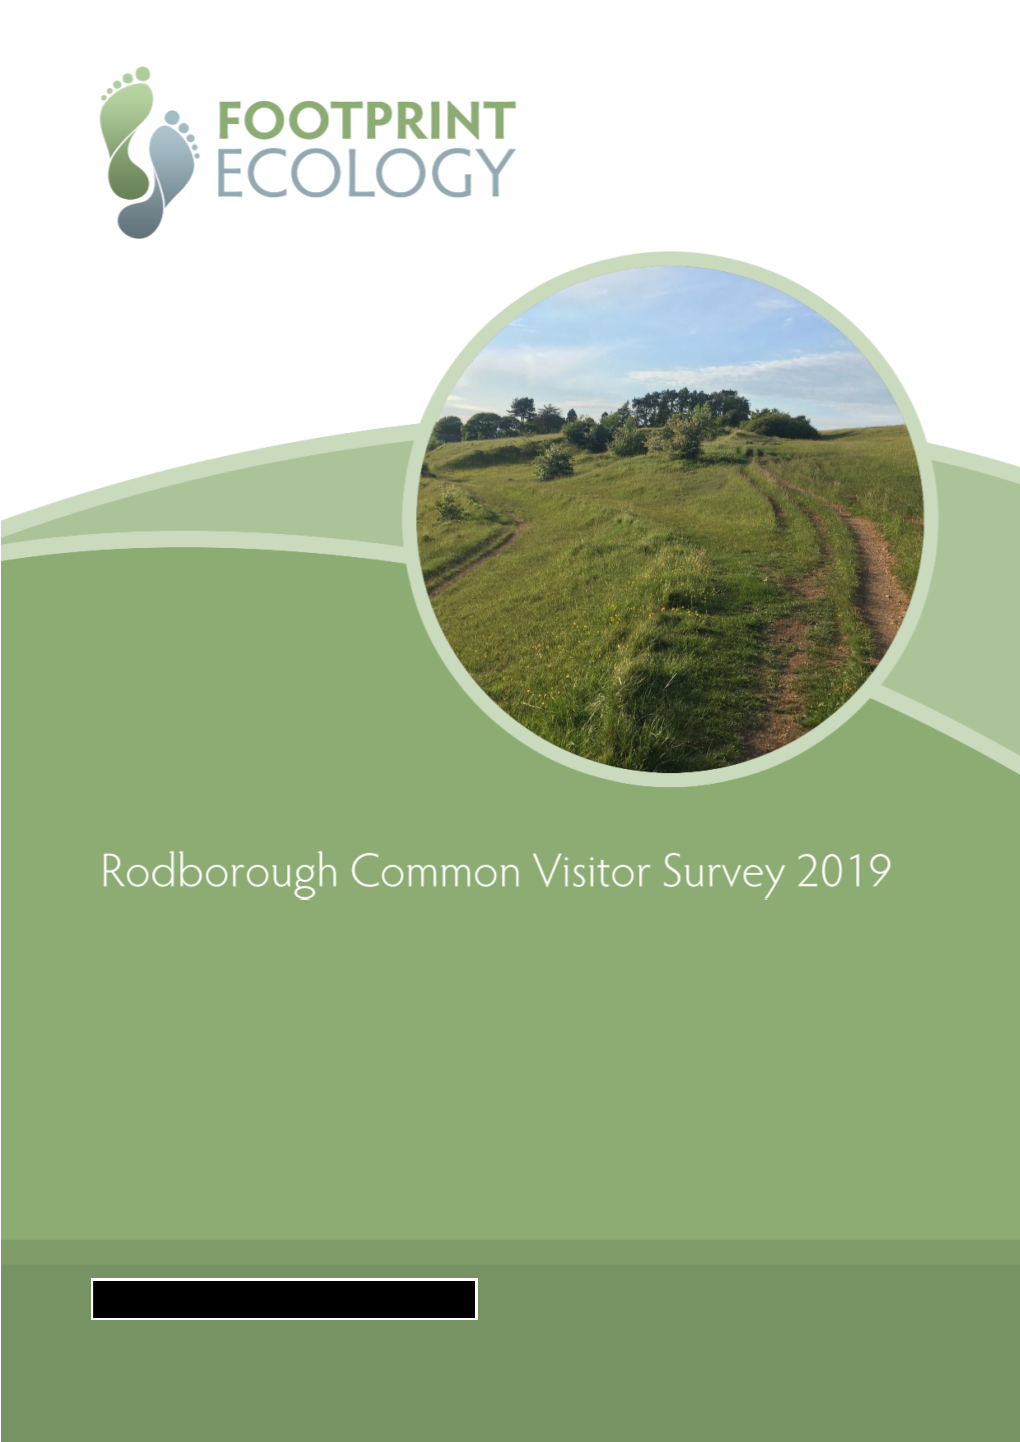 Rodborough Common Visitor Survey 2019